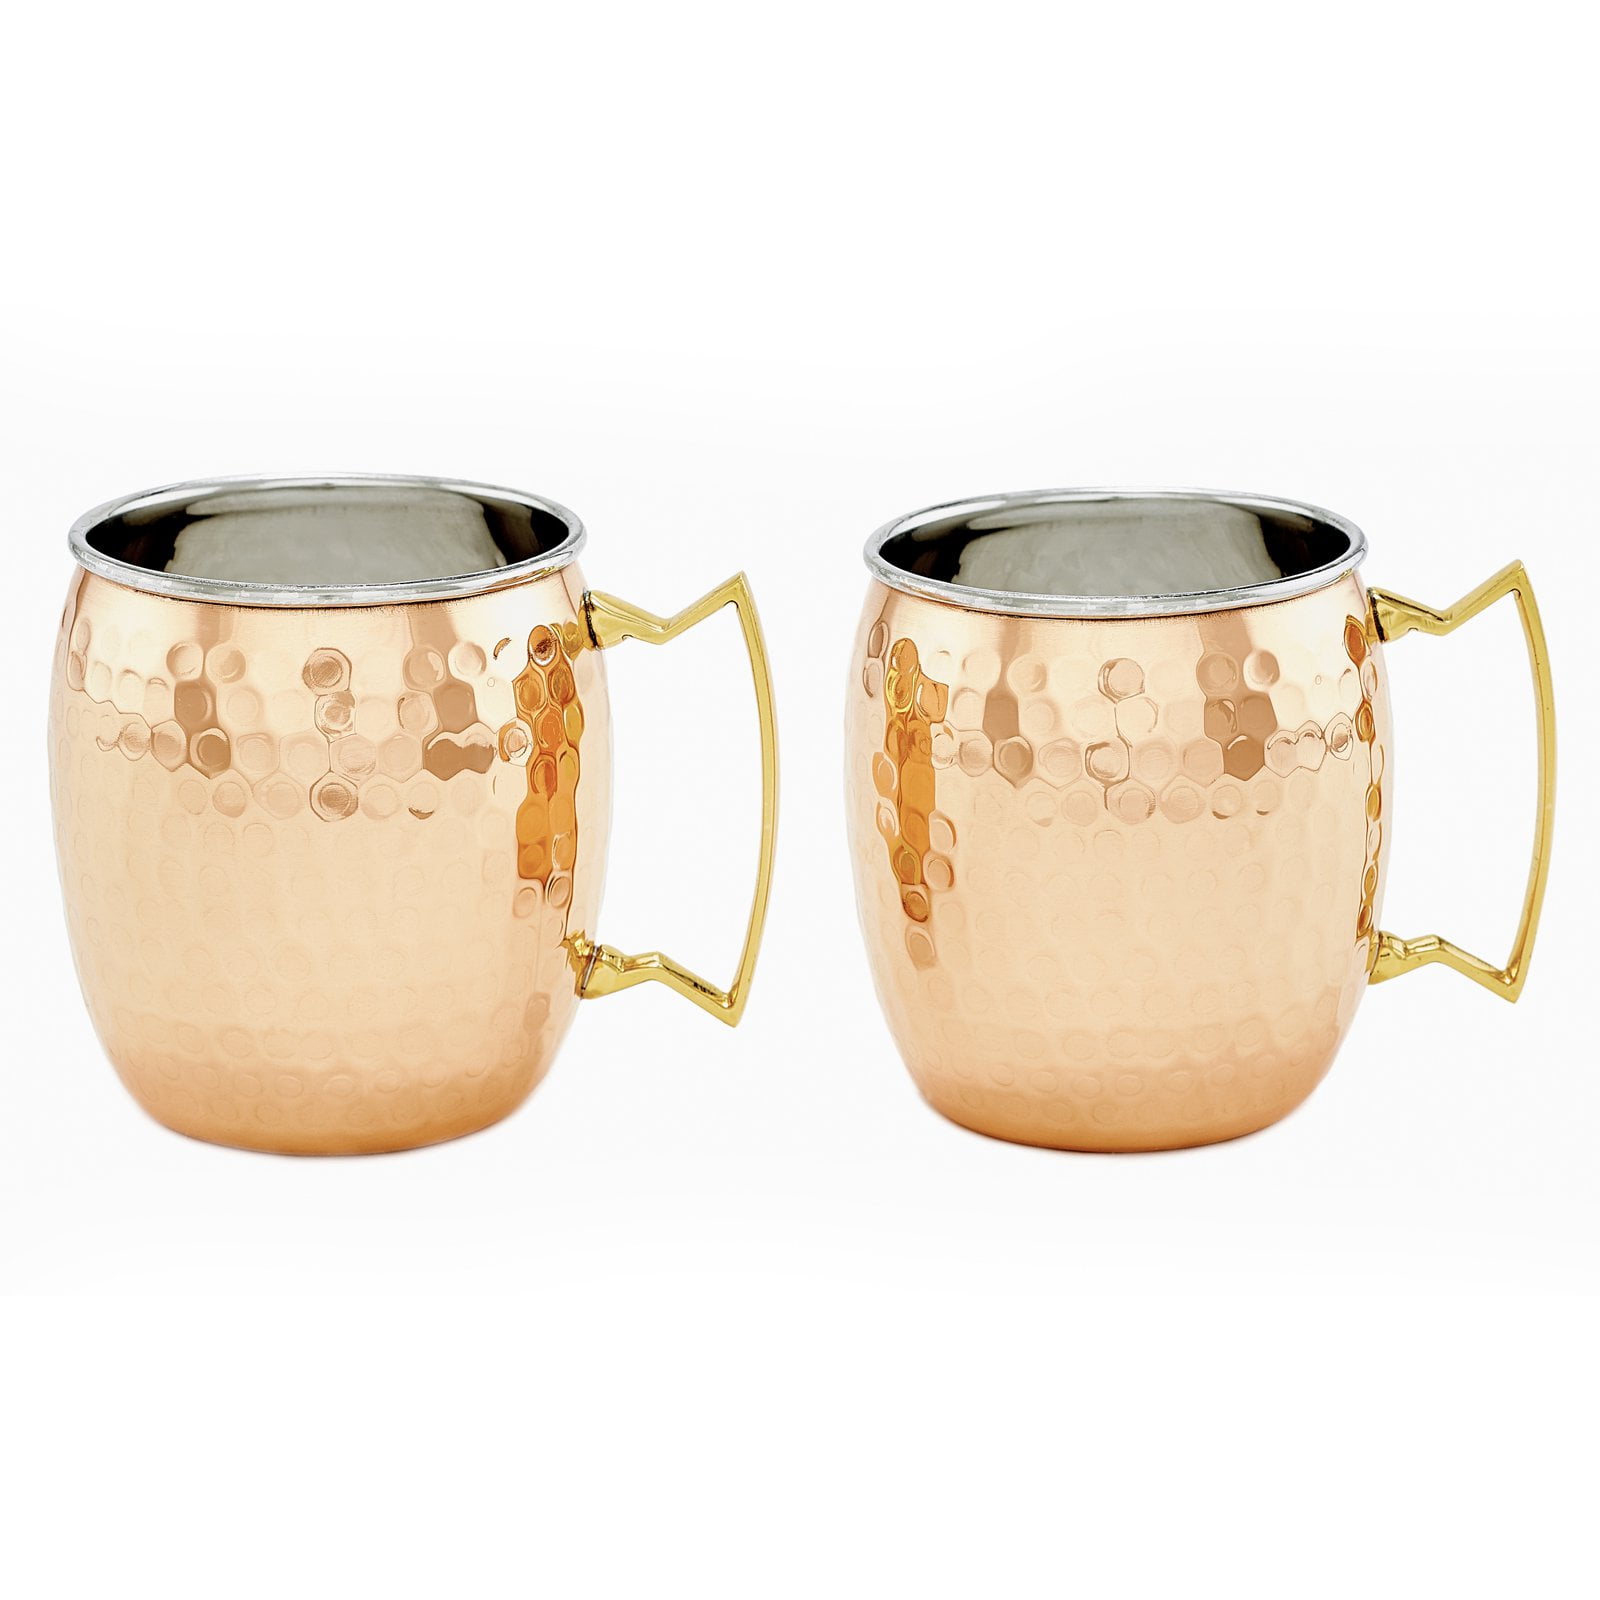 Old Dutch Copper Moscow Mule Mugs - Set of 2 - Walmart.com